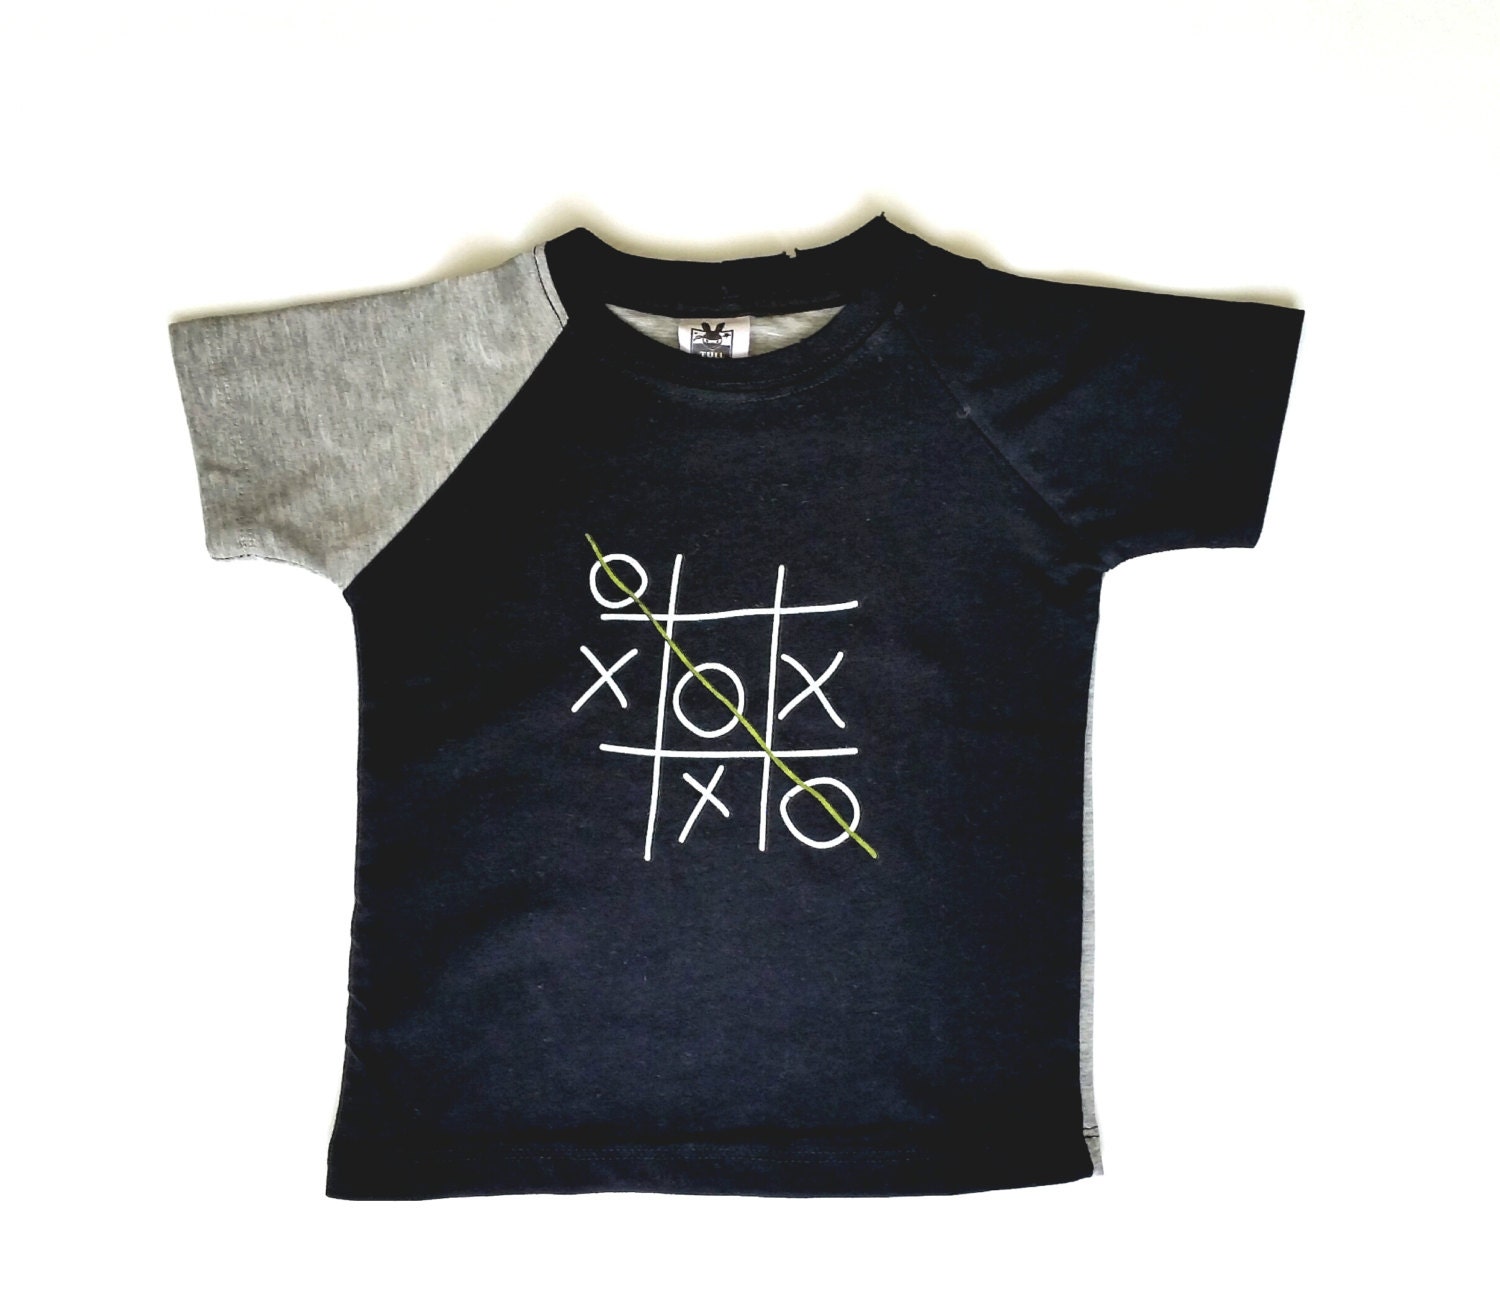 On Sale Boy Toddler top Black top baby T-Shirt Boys top